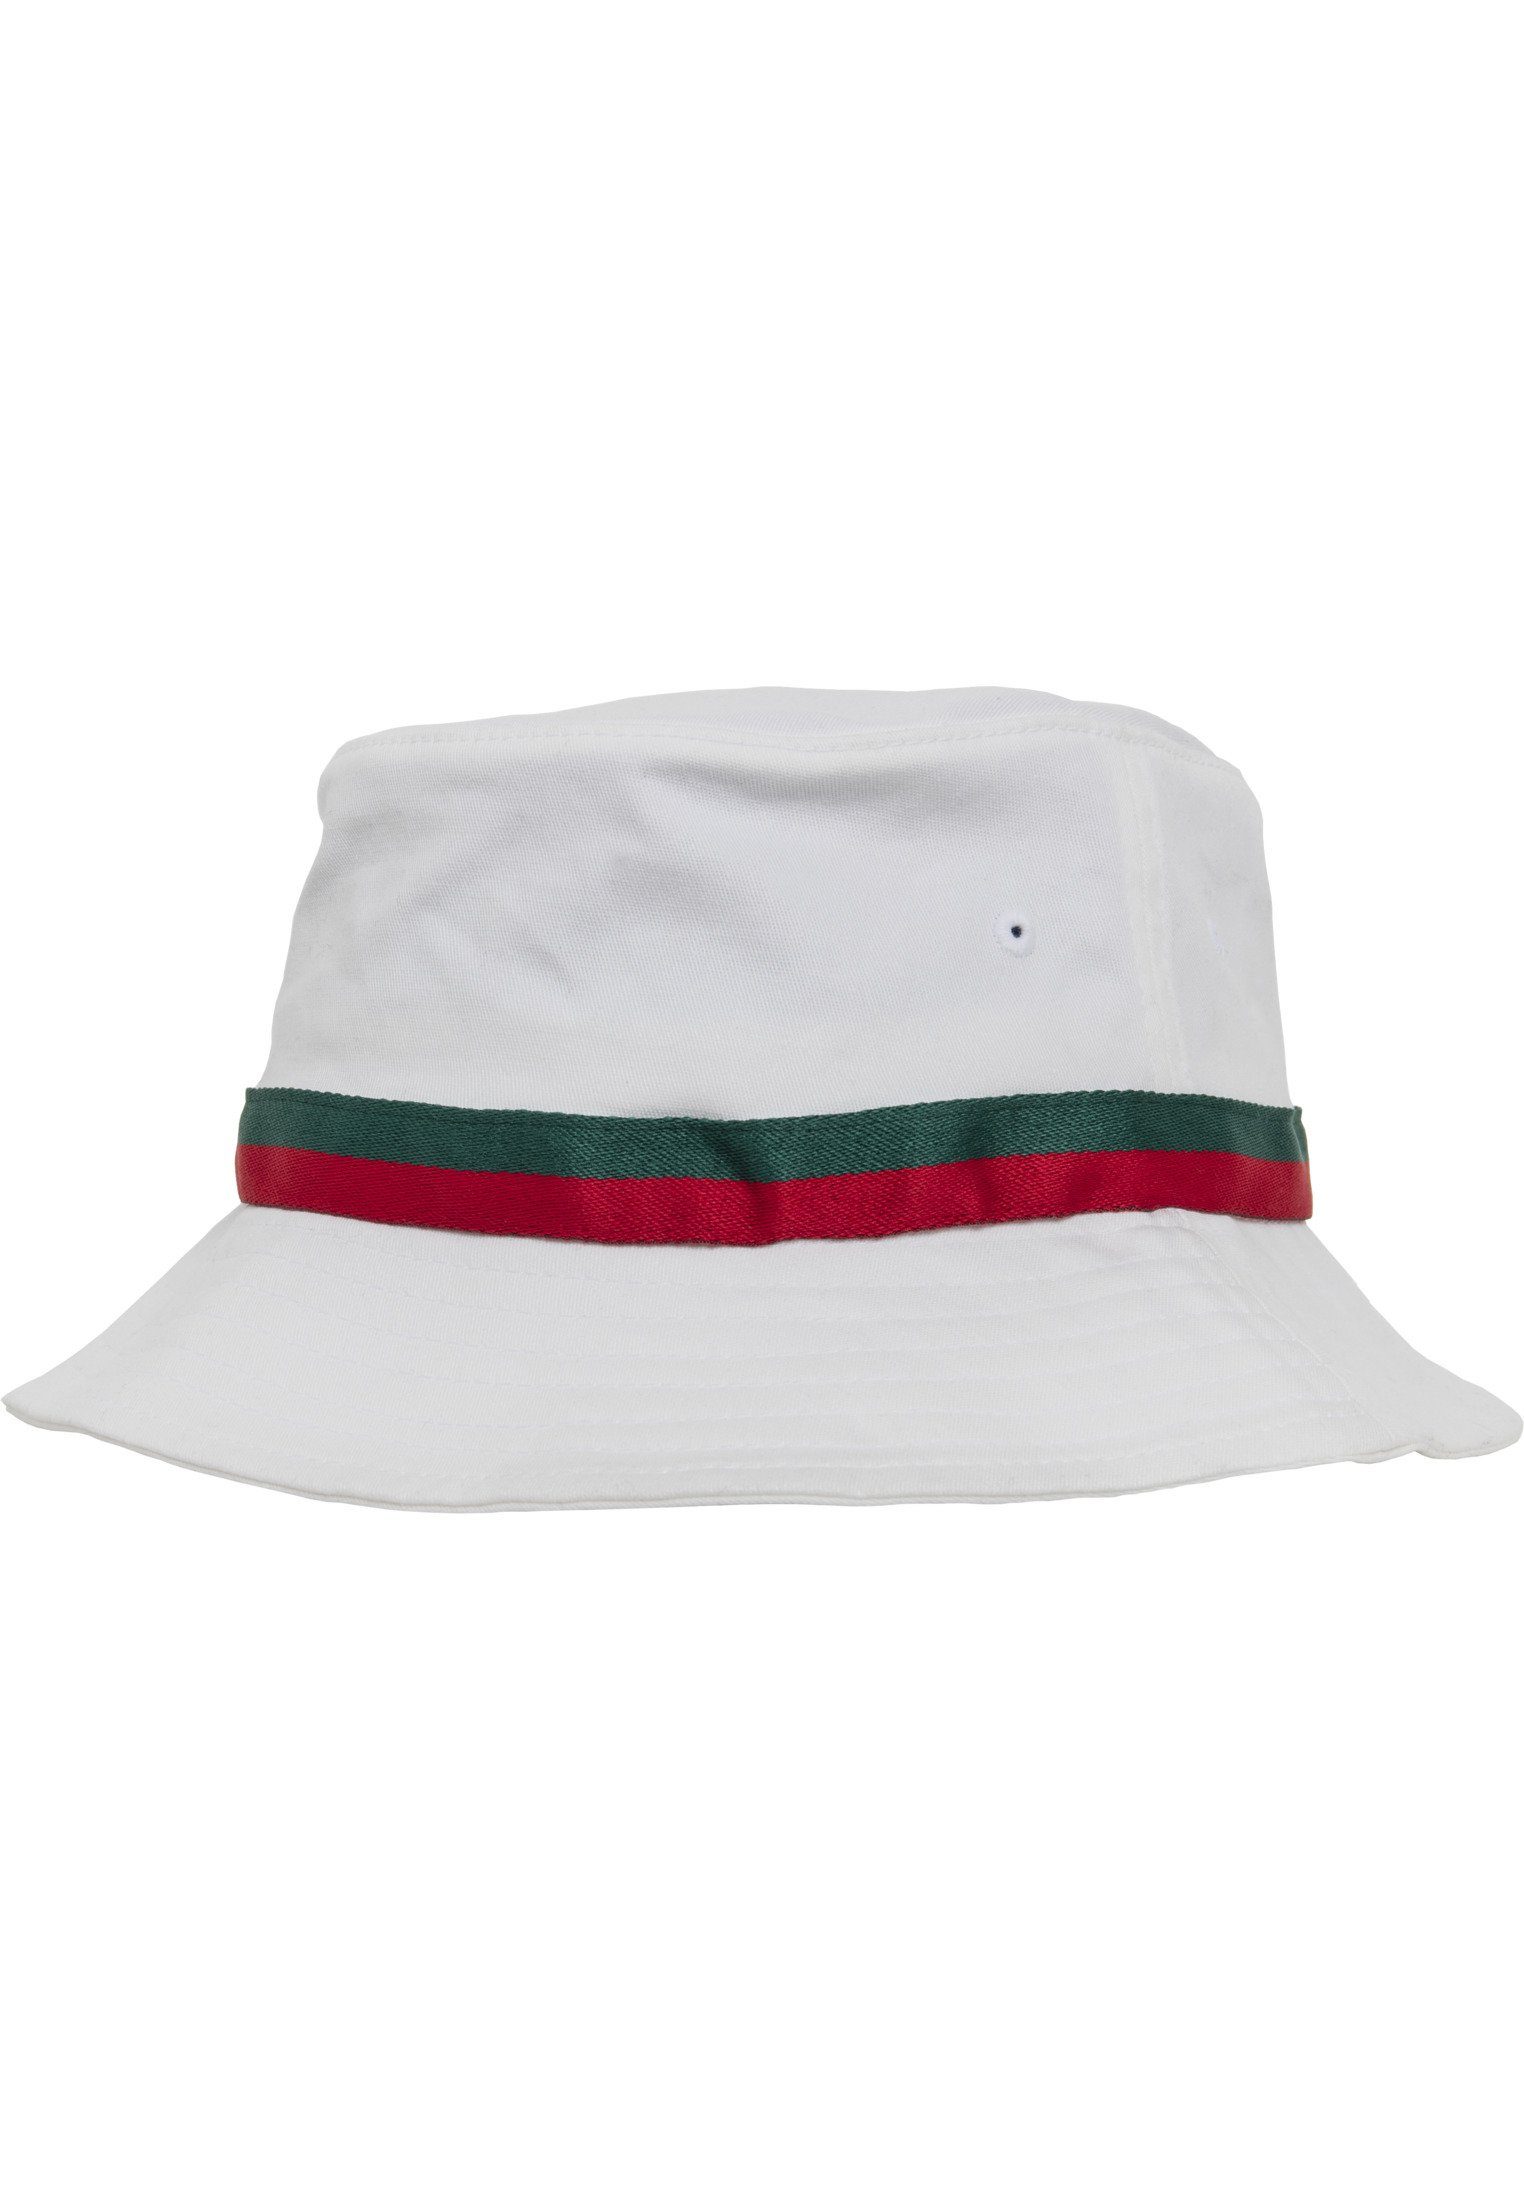 Hat Flexfit white/firered/green Bucket Flex Bucket Hat Cap Stripe